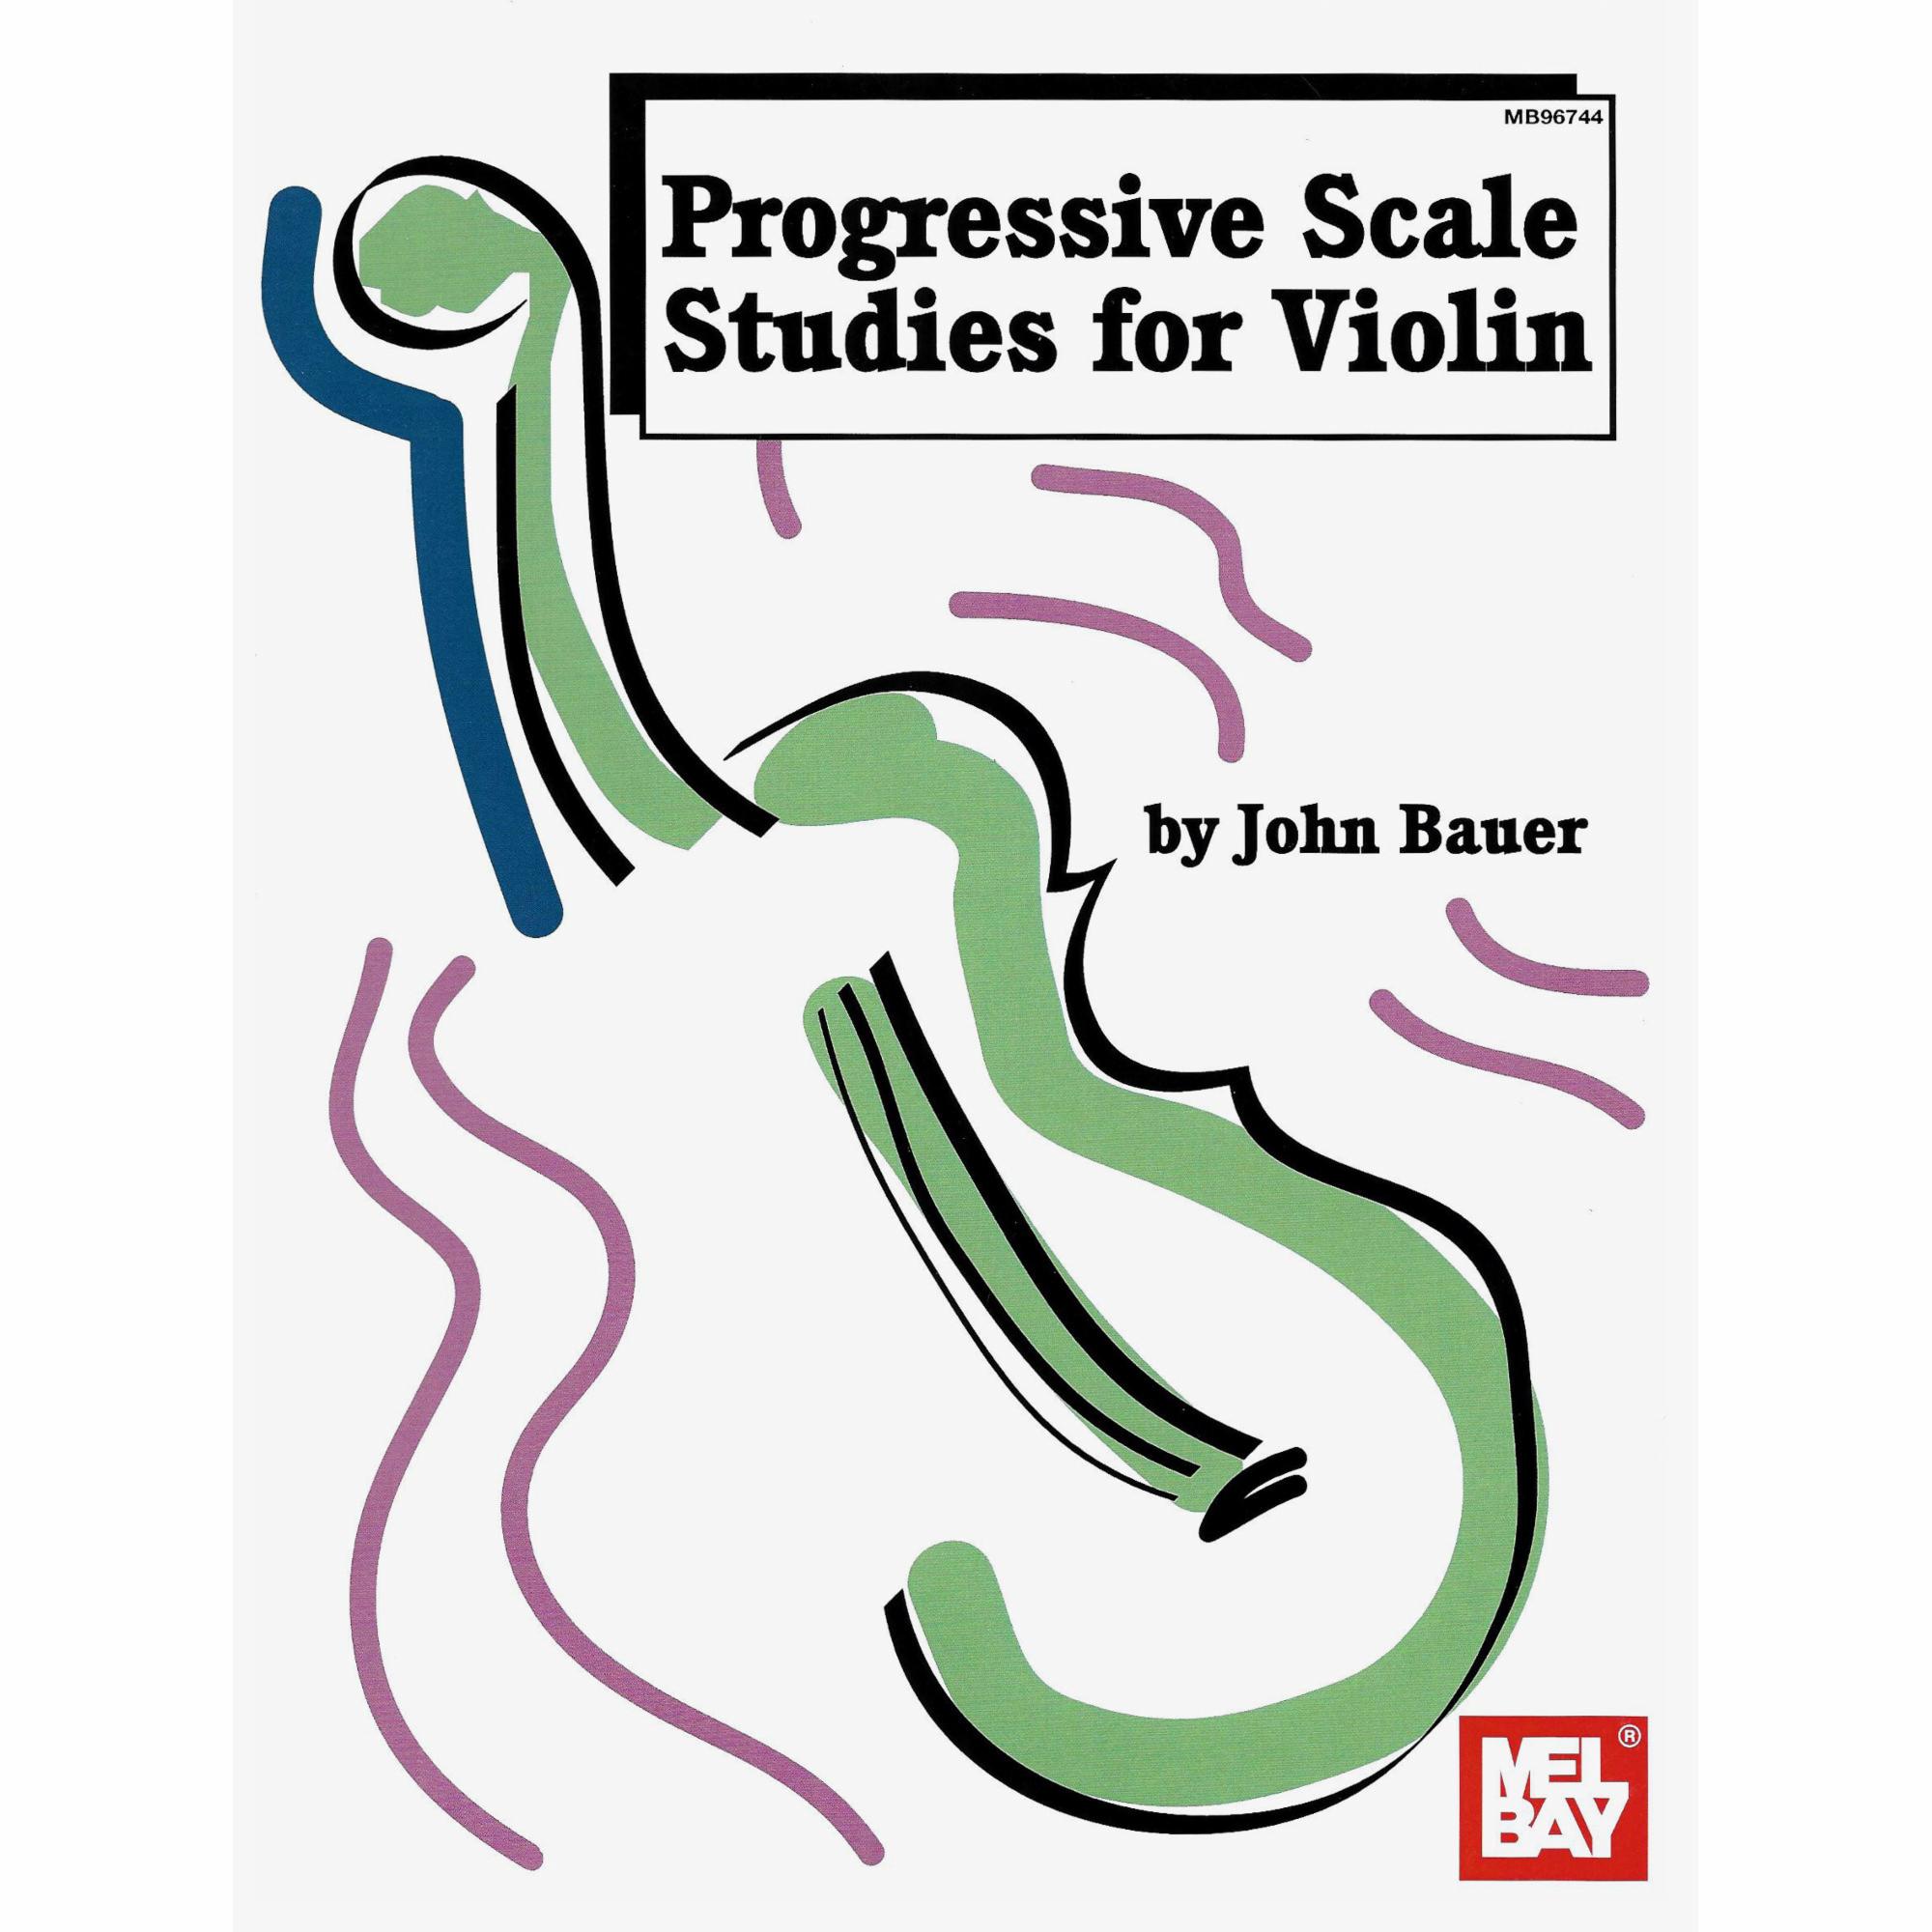 Progressive Scales Studies for Violin